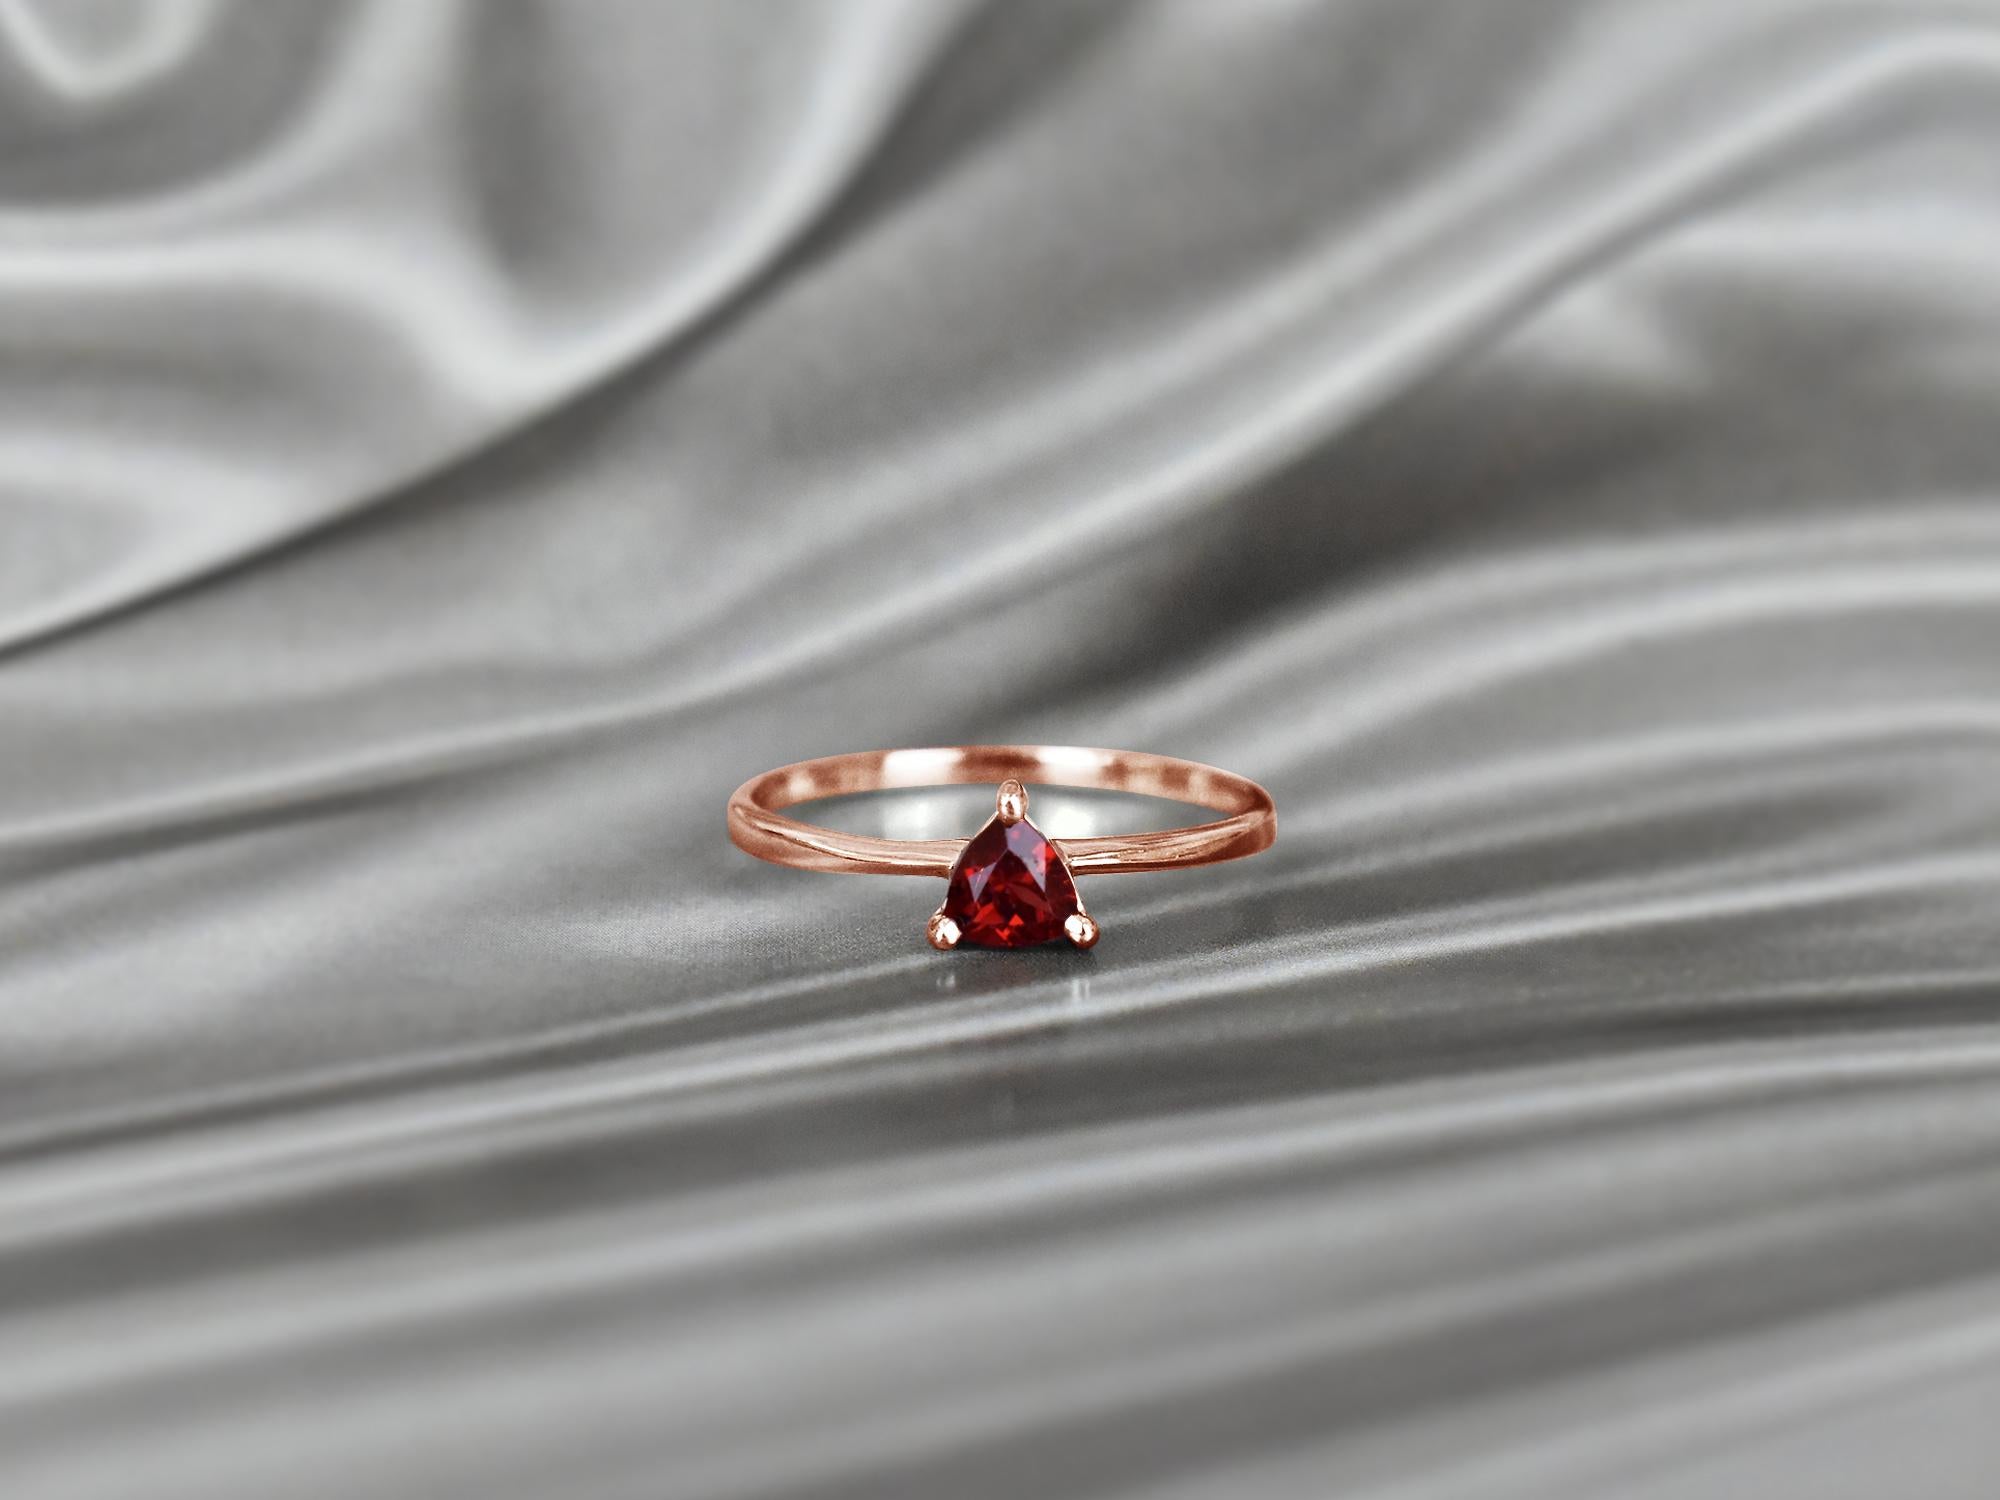 For Sale:  14k Gold Trillion Gemstone 6 mm Trillion Gemstone Engagement Ring Stackable Ring 2